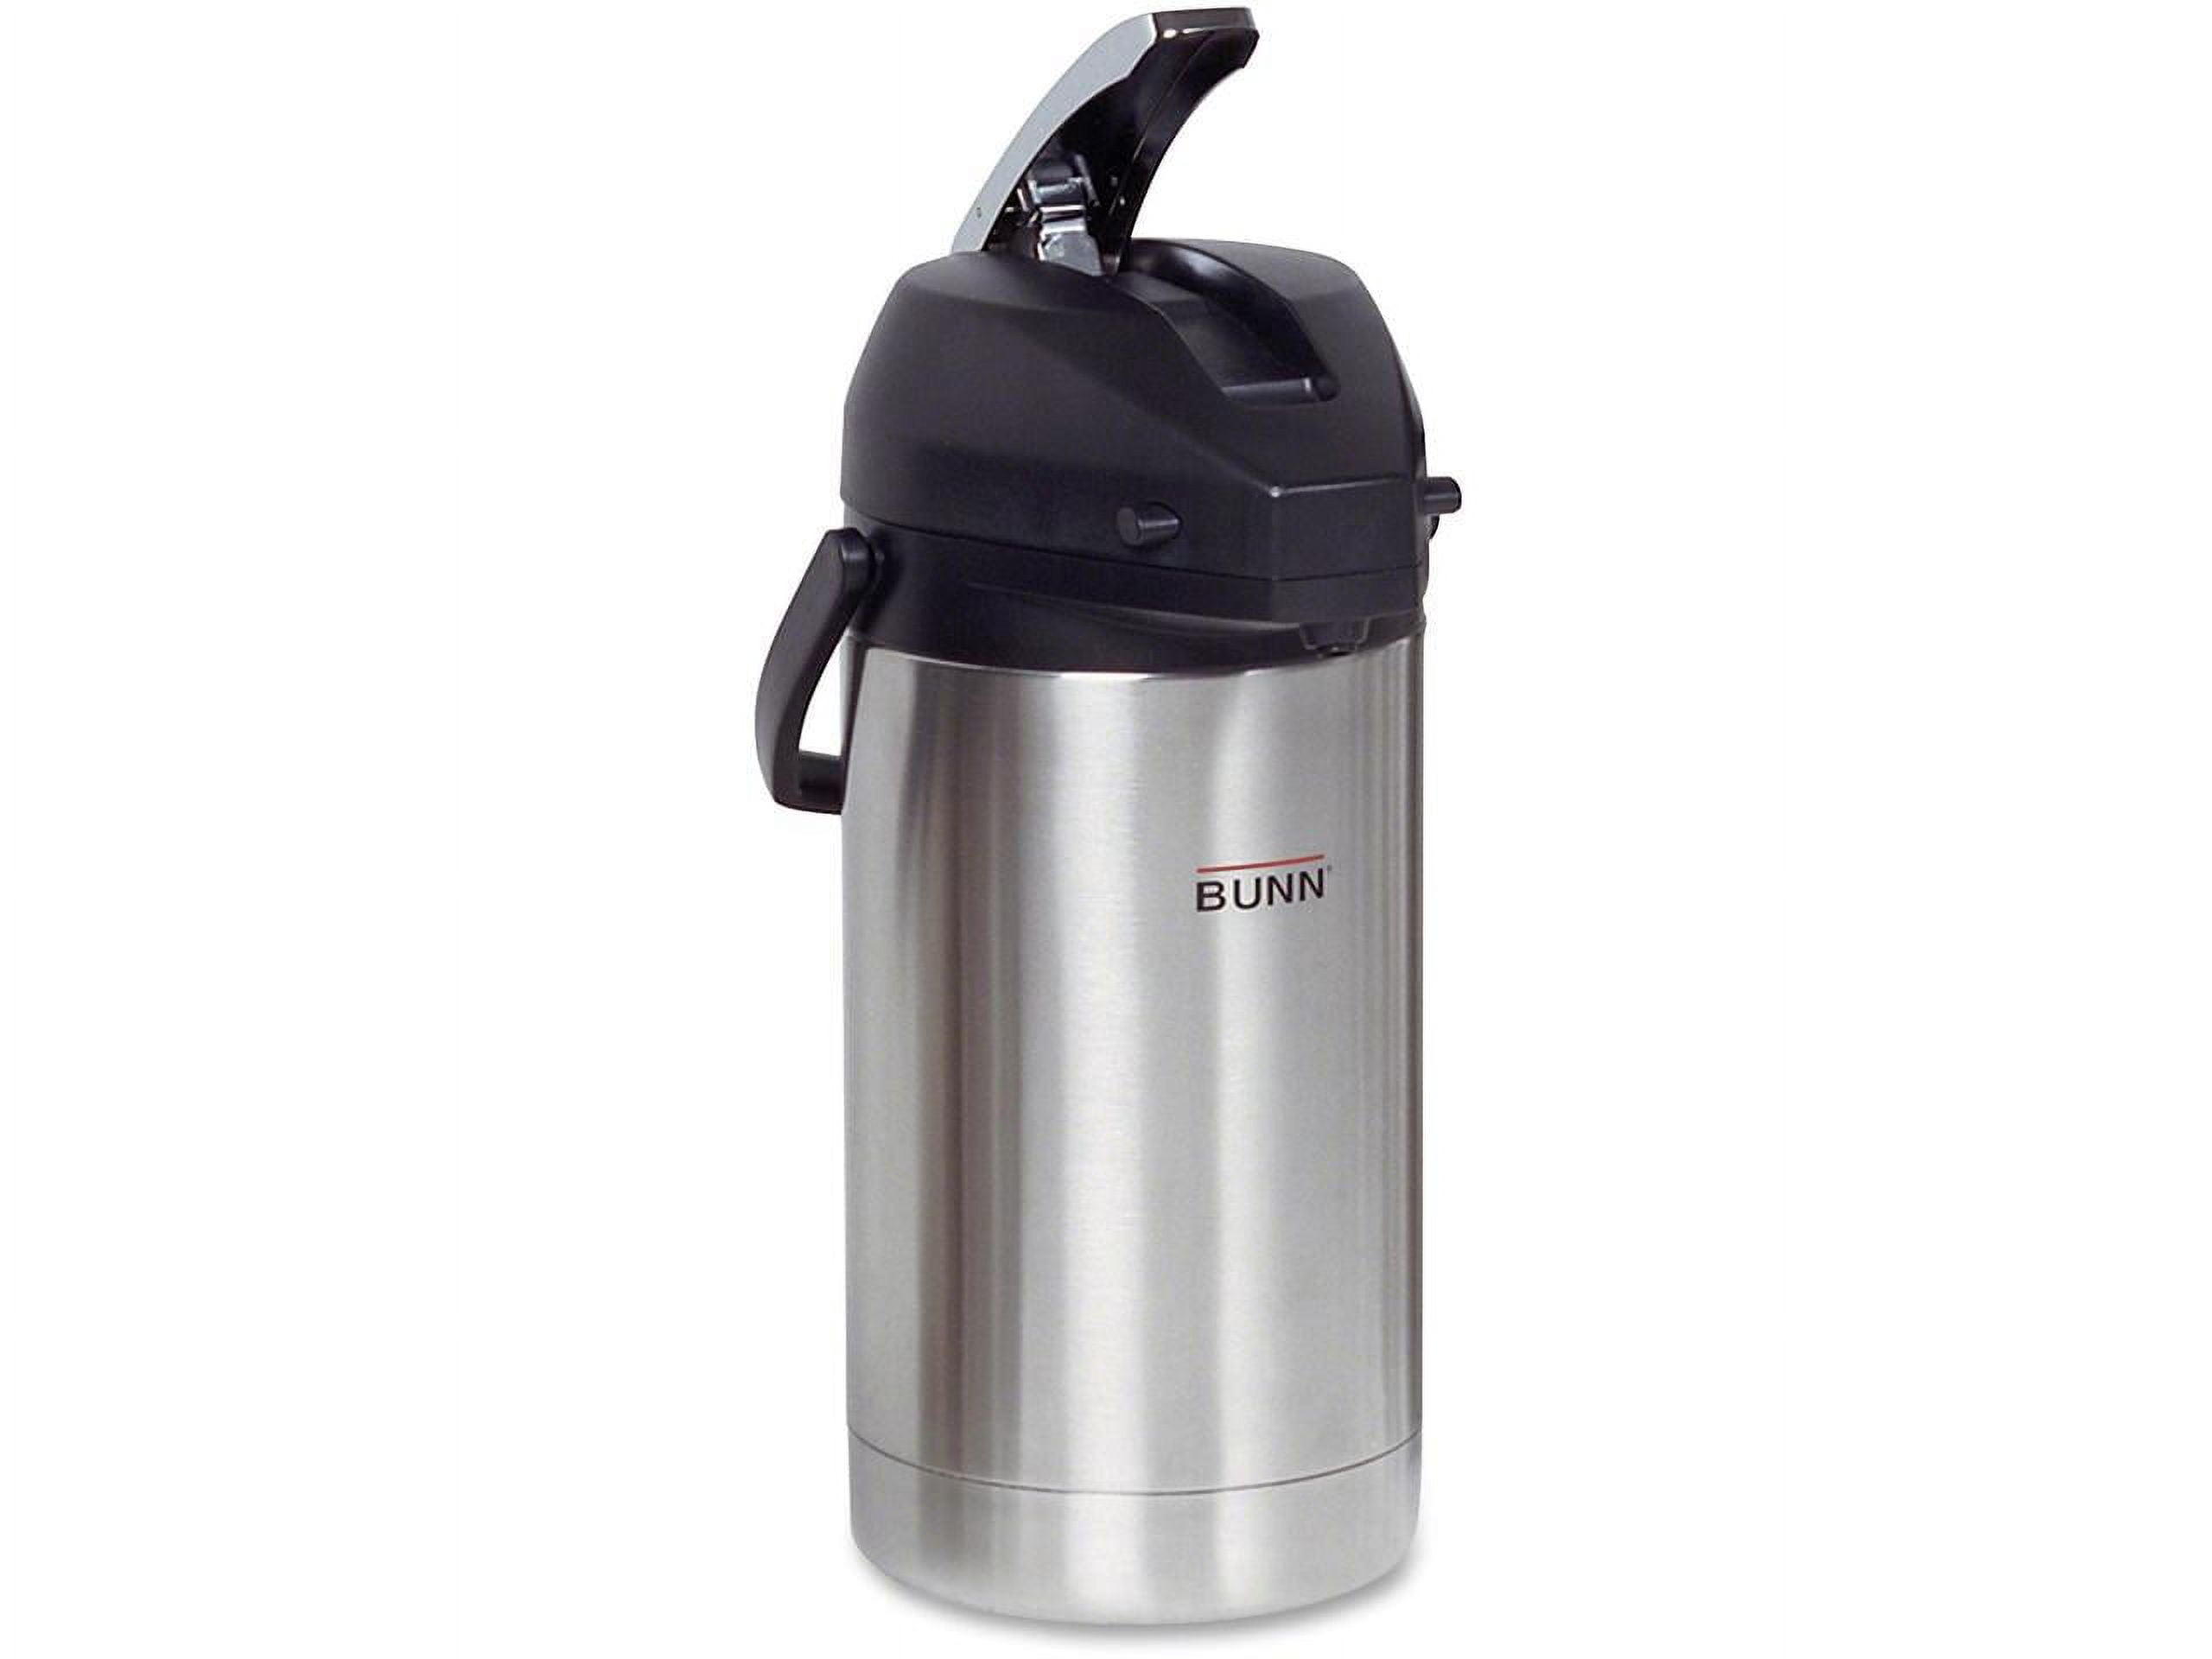 Met Lux 3L Silver Stainless Steel Airpot Coffee Dispenser - Pump Lever, 24  hr Heat Retention - 6 x 6 x 16 - 1 count box